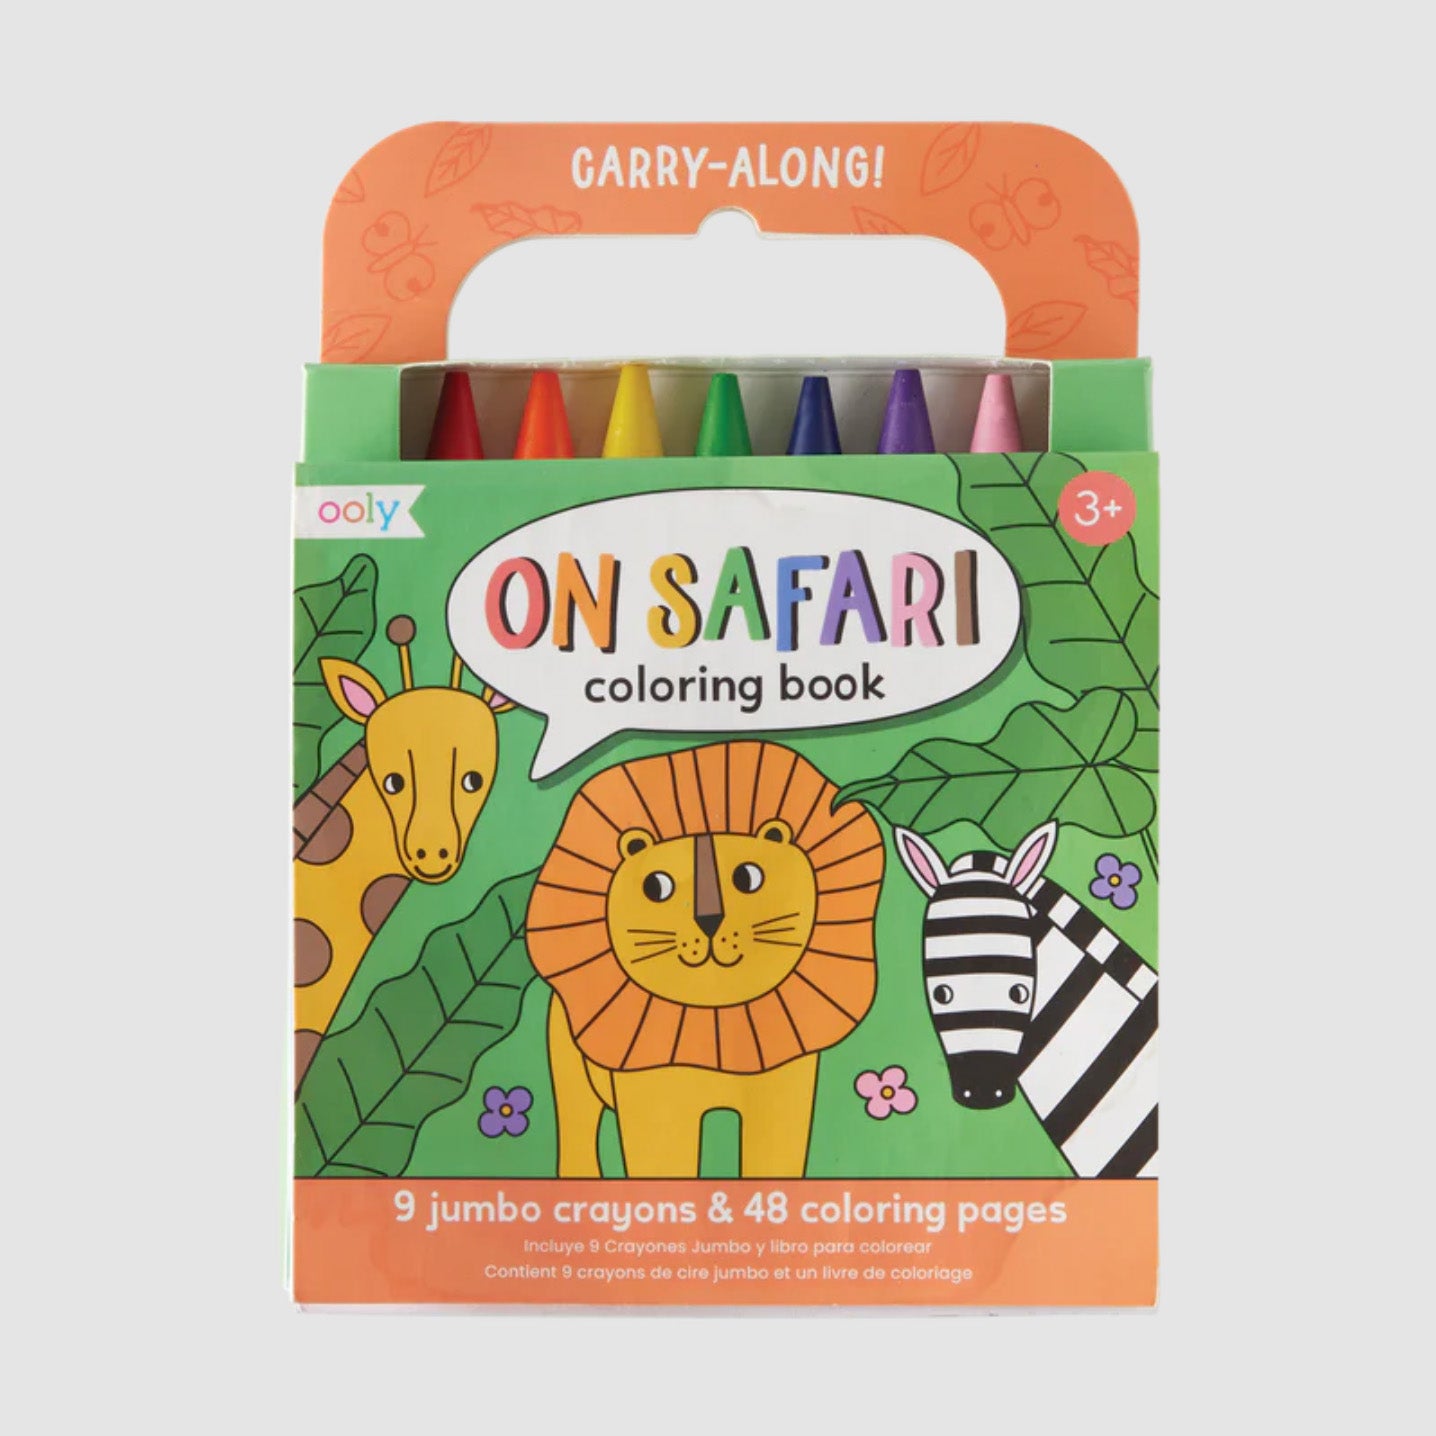 on safari carry along coloring book